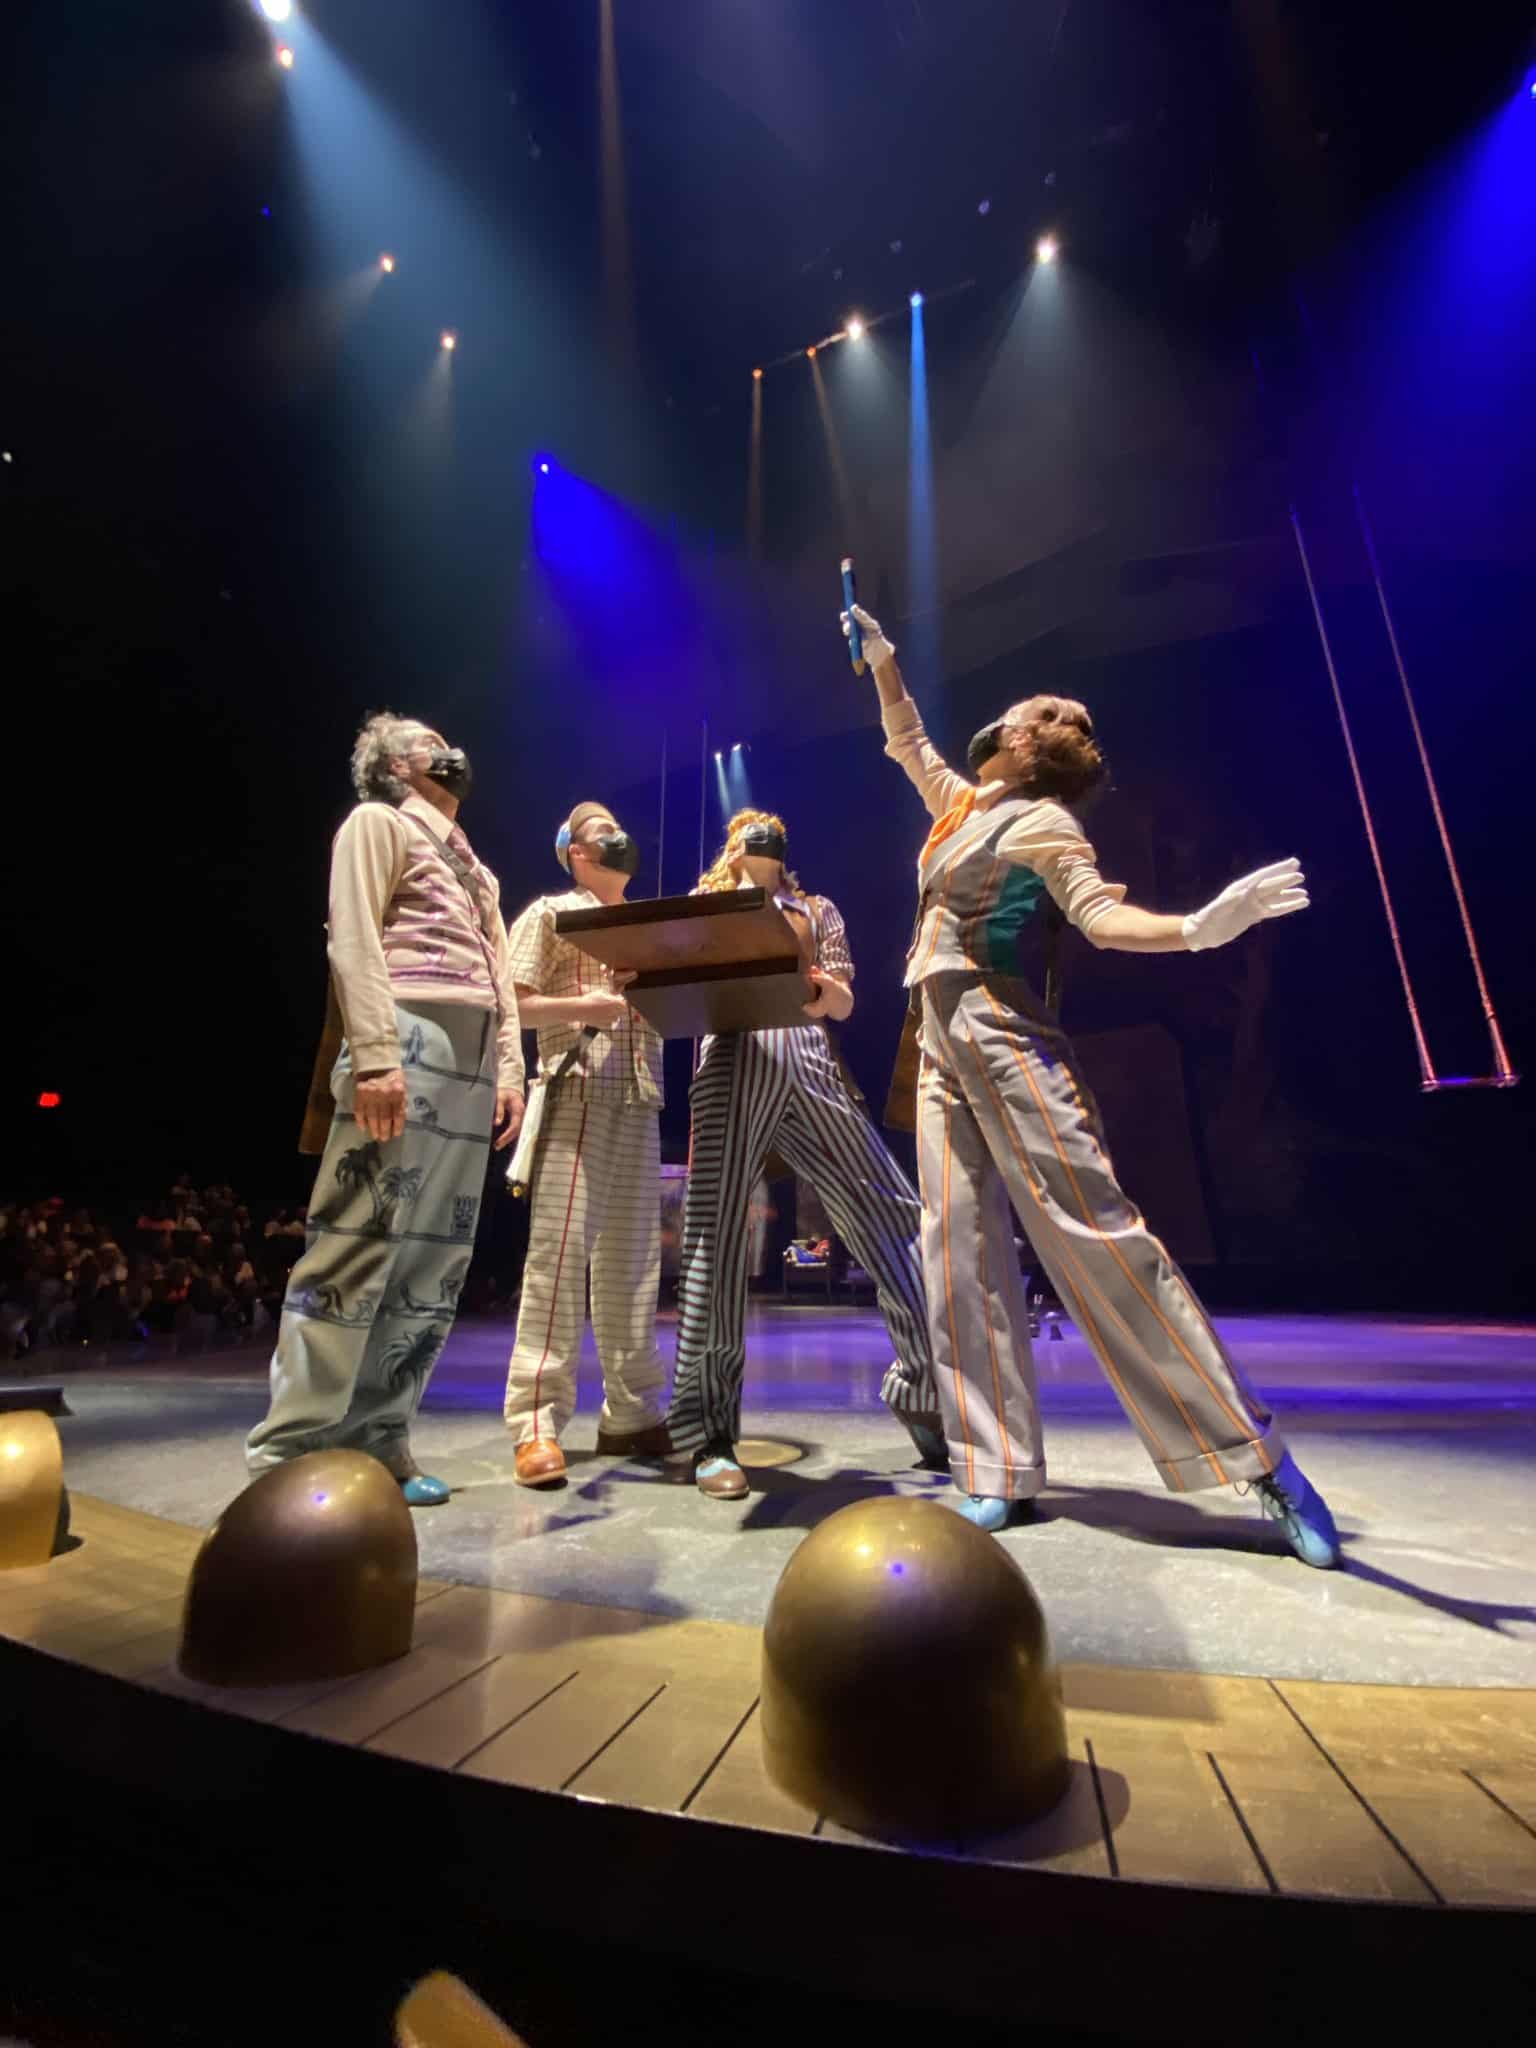 Cirque du Soleil Drawn to Life - preshow entertainment